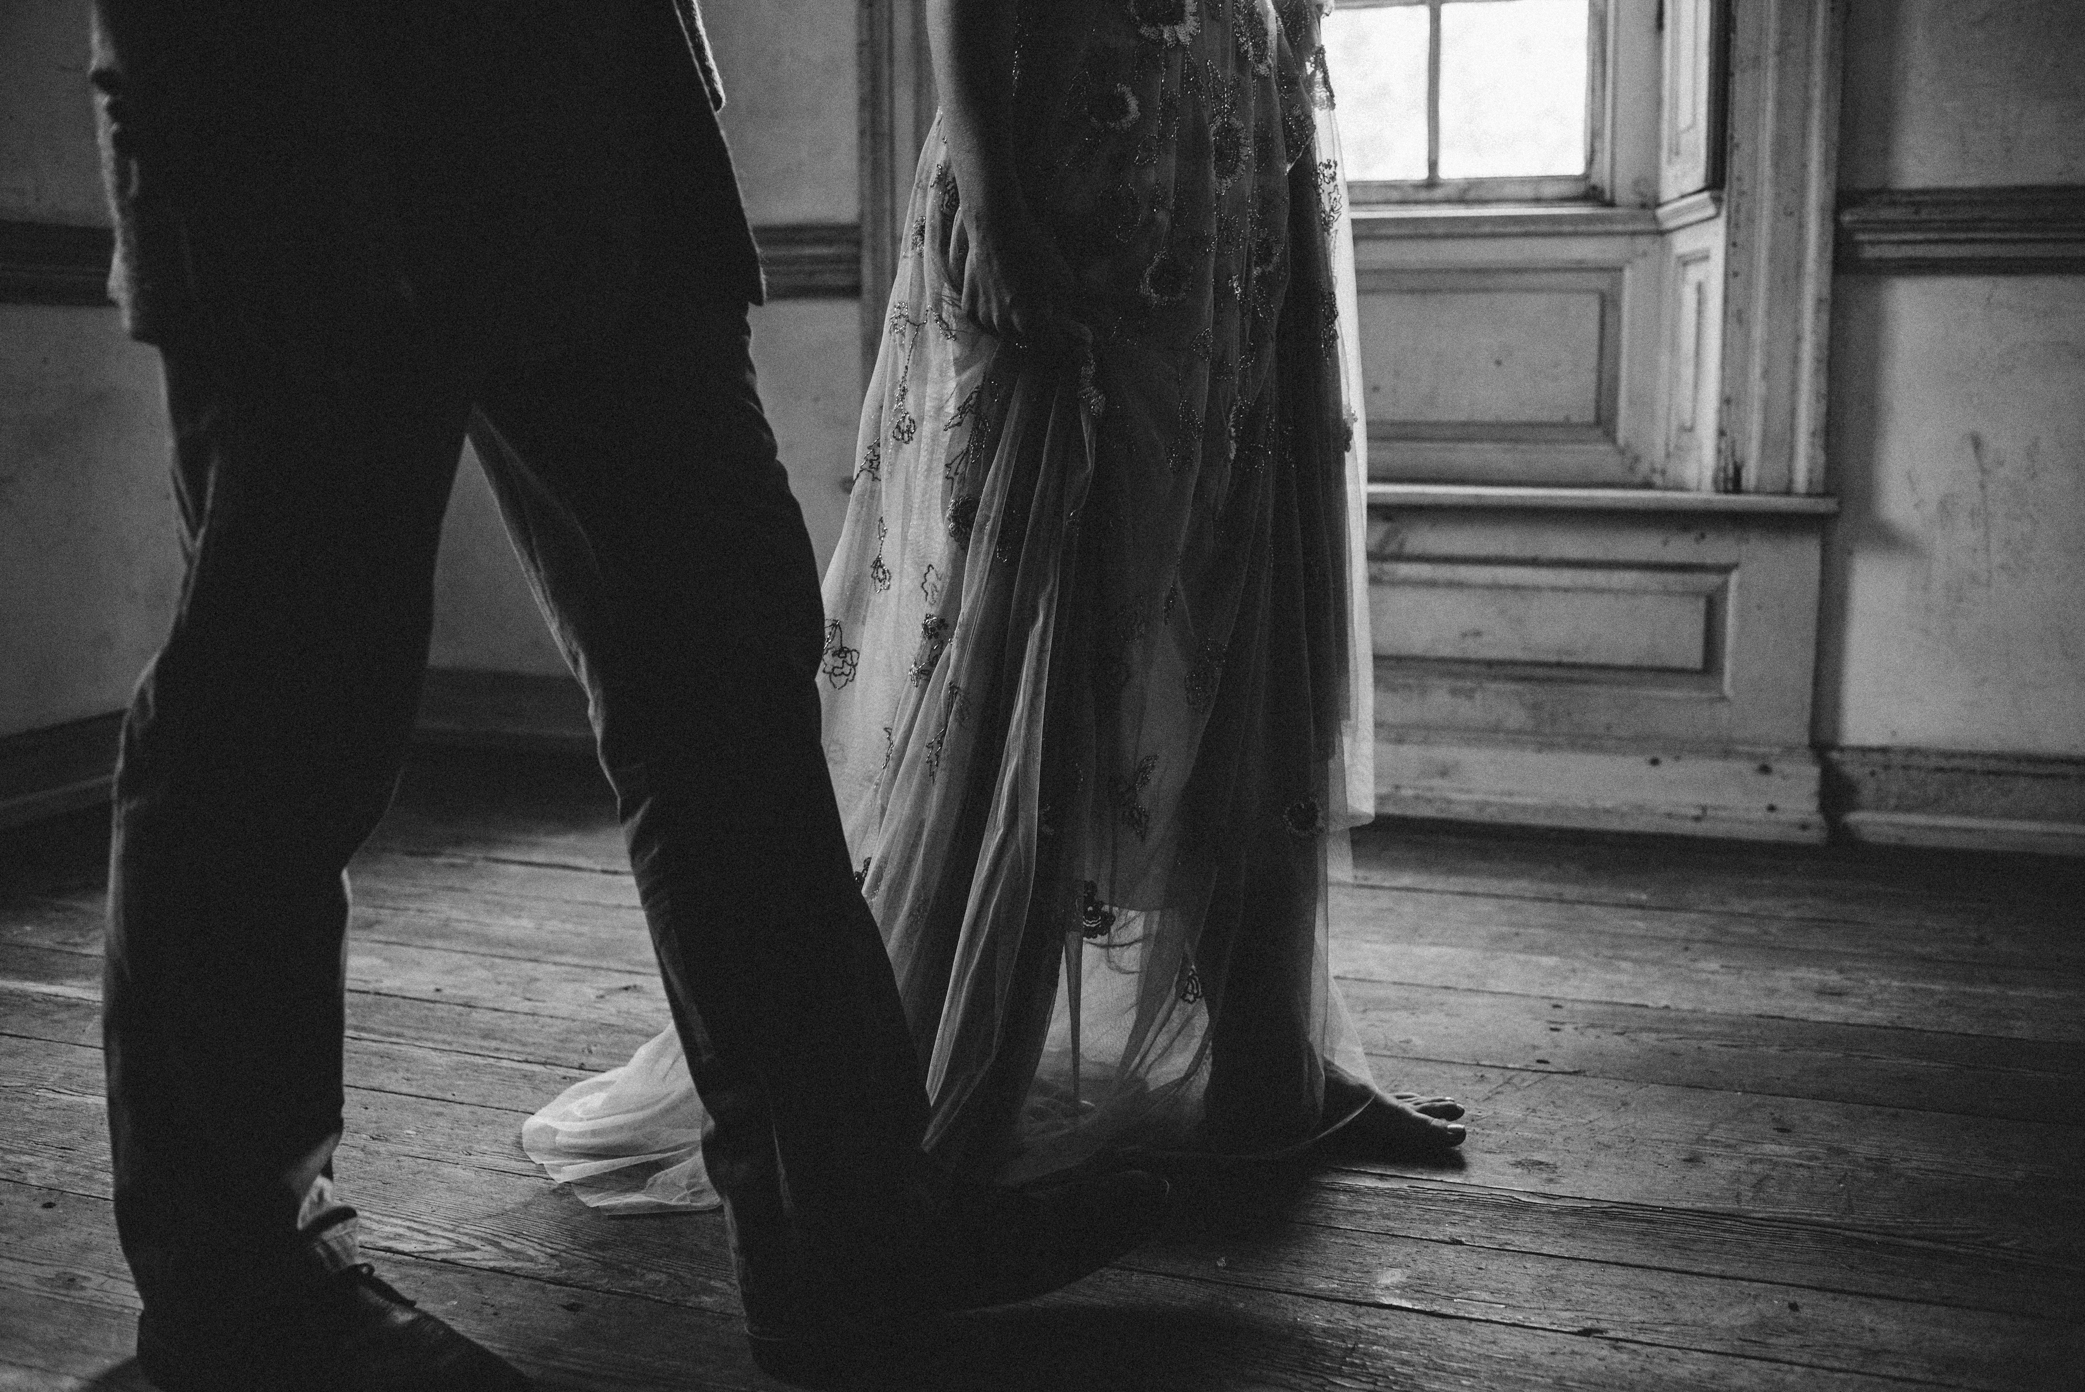 Salubria Historic Manor House Virginia - Moody Scottish Highland Wedding Styled Shoot - White Sails Creative - Sage and Silhouettes - BHLDN - Bijous Sweet Treats_67_2.JPG